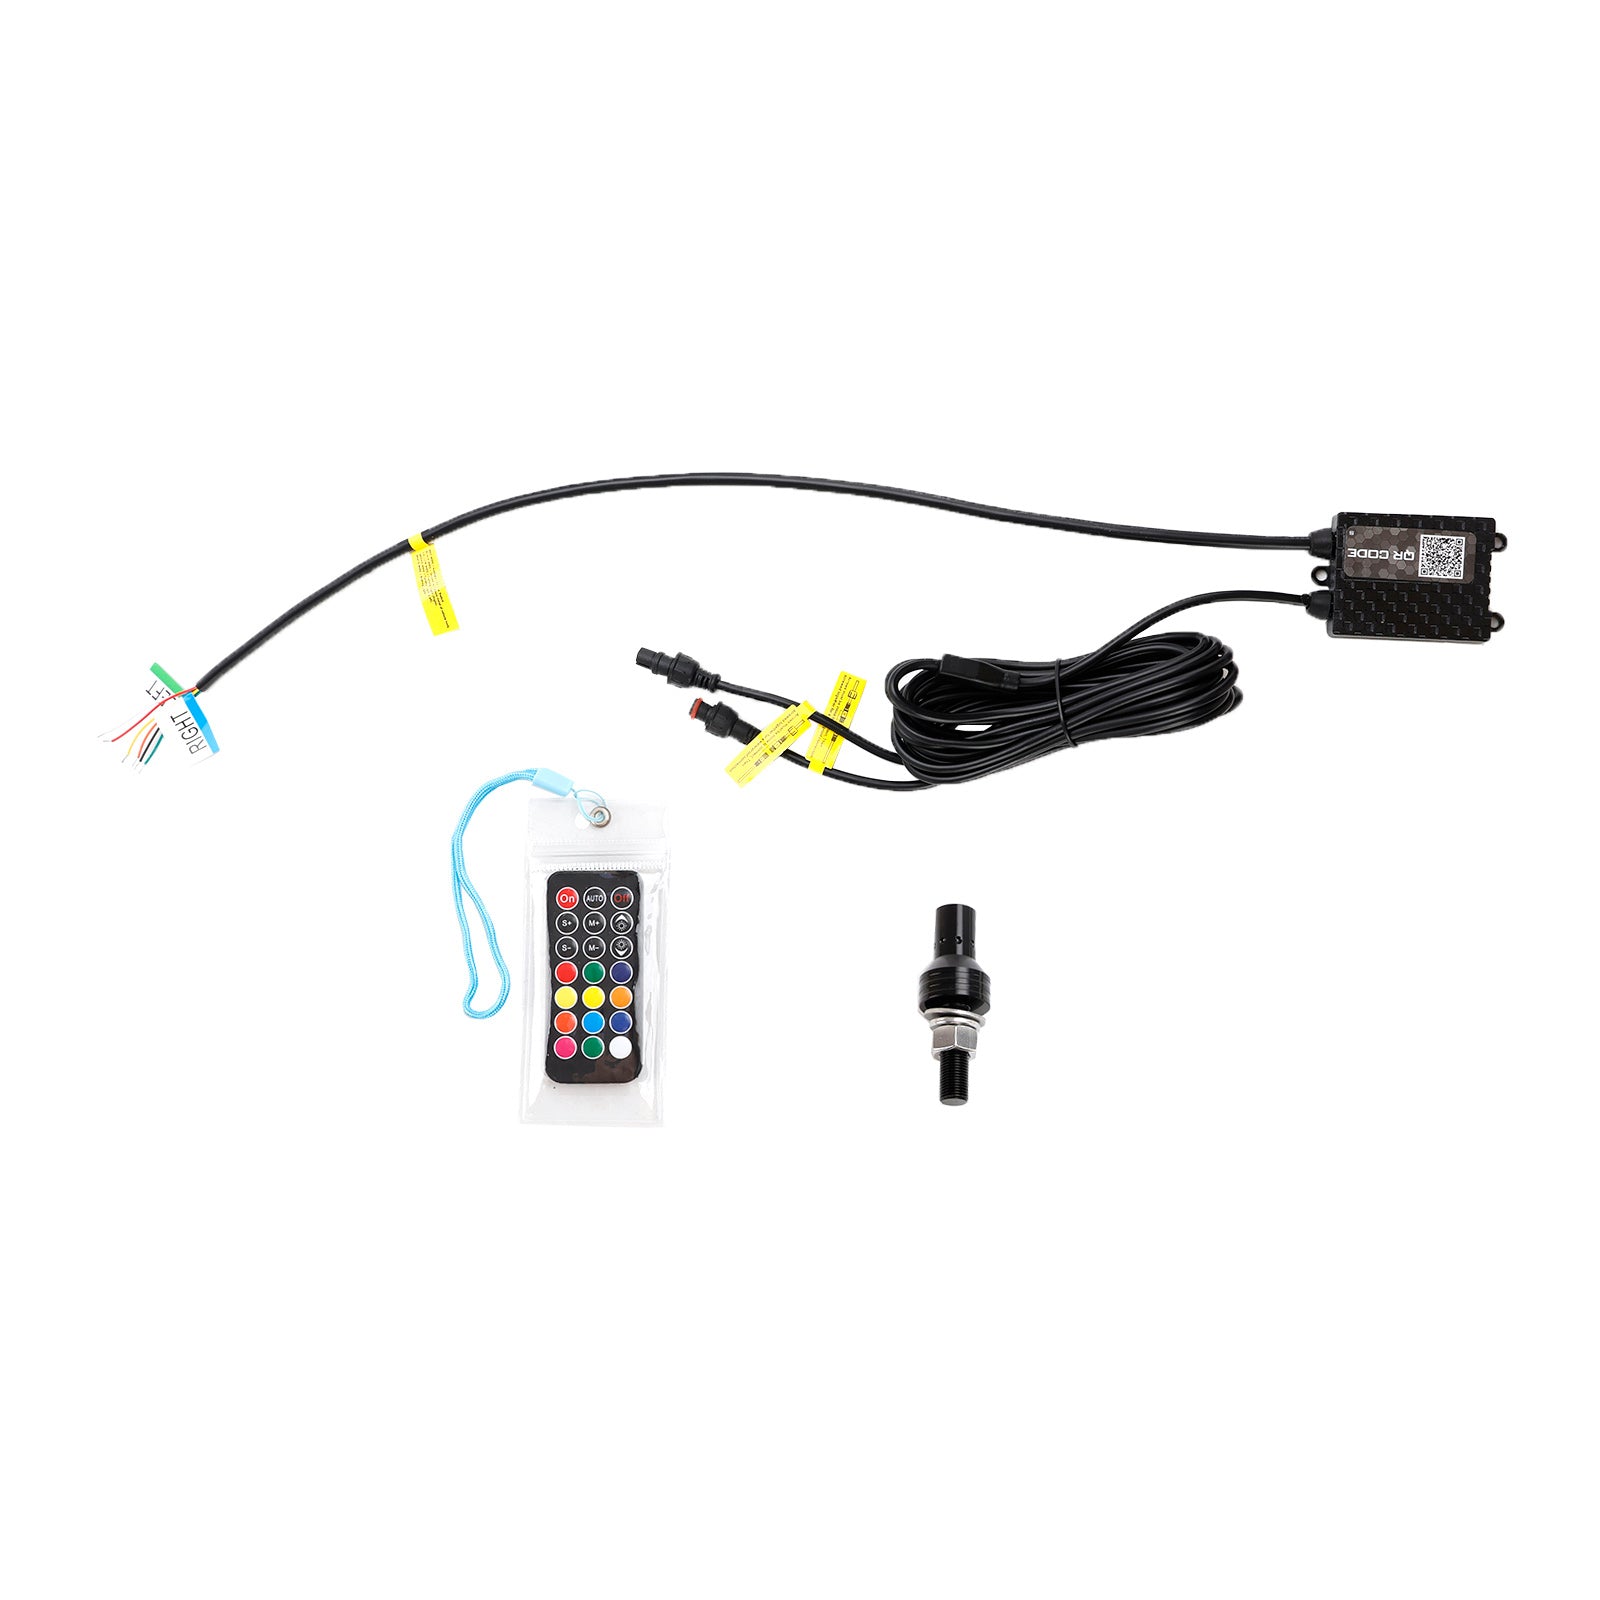 Polaris UTV ATV 4ft RGB LED APP Whip Lights Antenna W/ Flag Remote Control